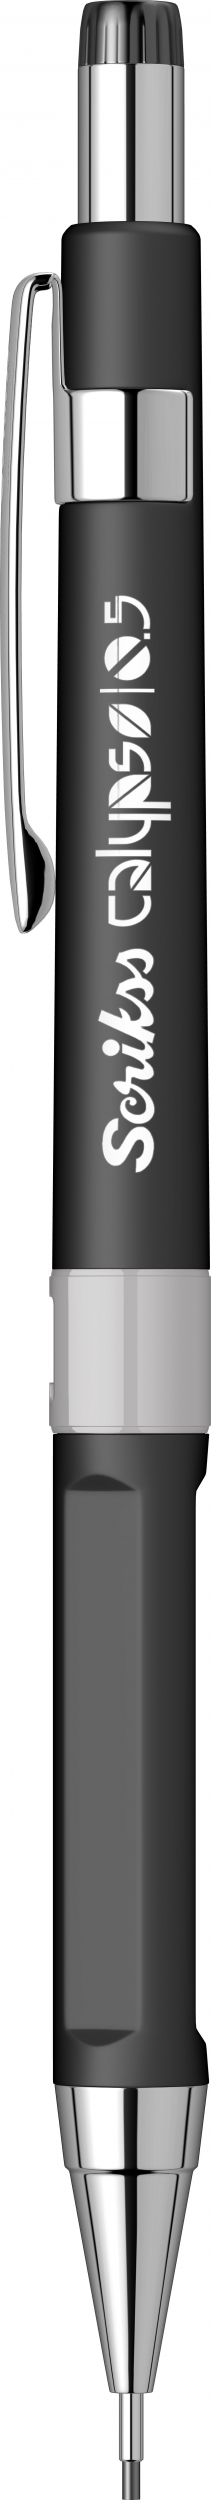 Механичен молив Scrikss Calypso, модел 61326, 0,5мм., цвят Черен